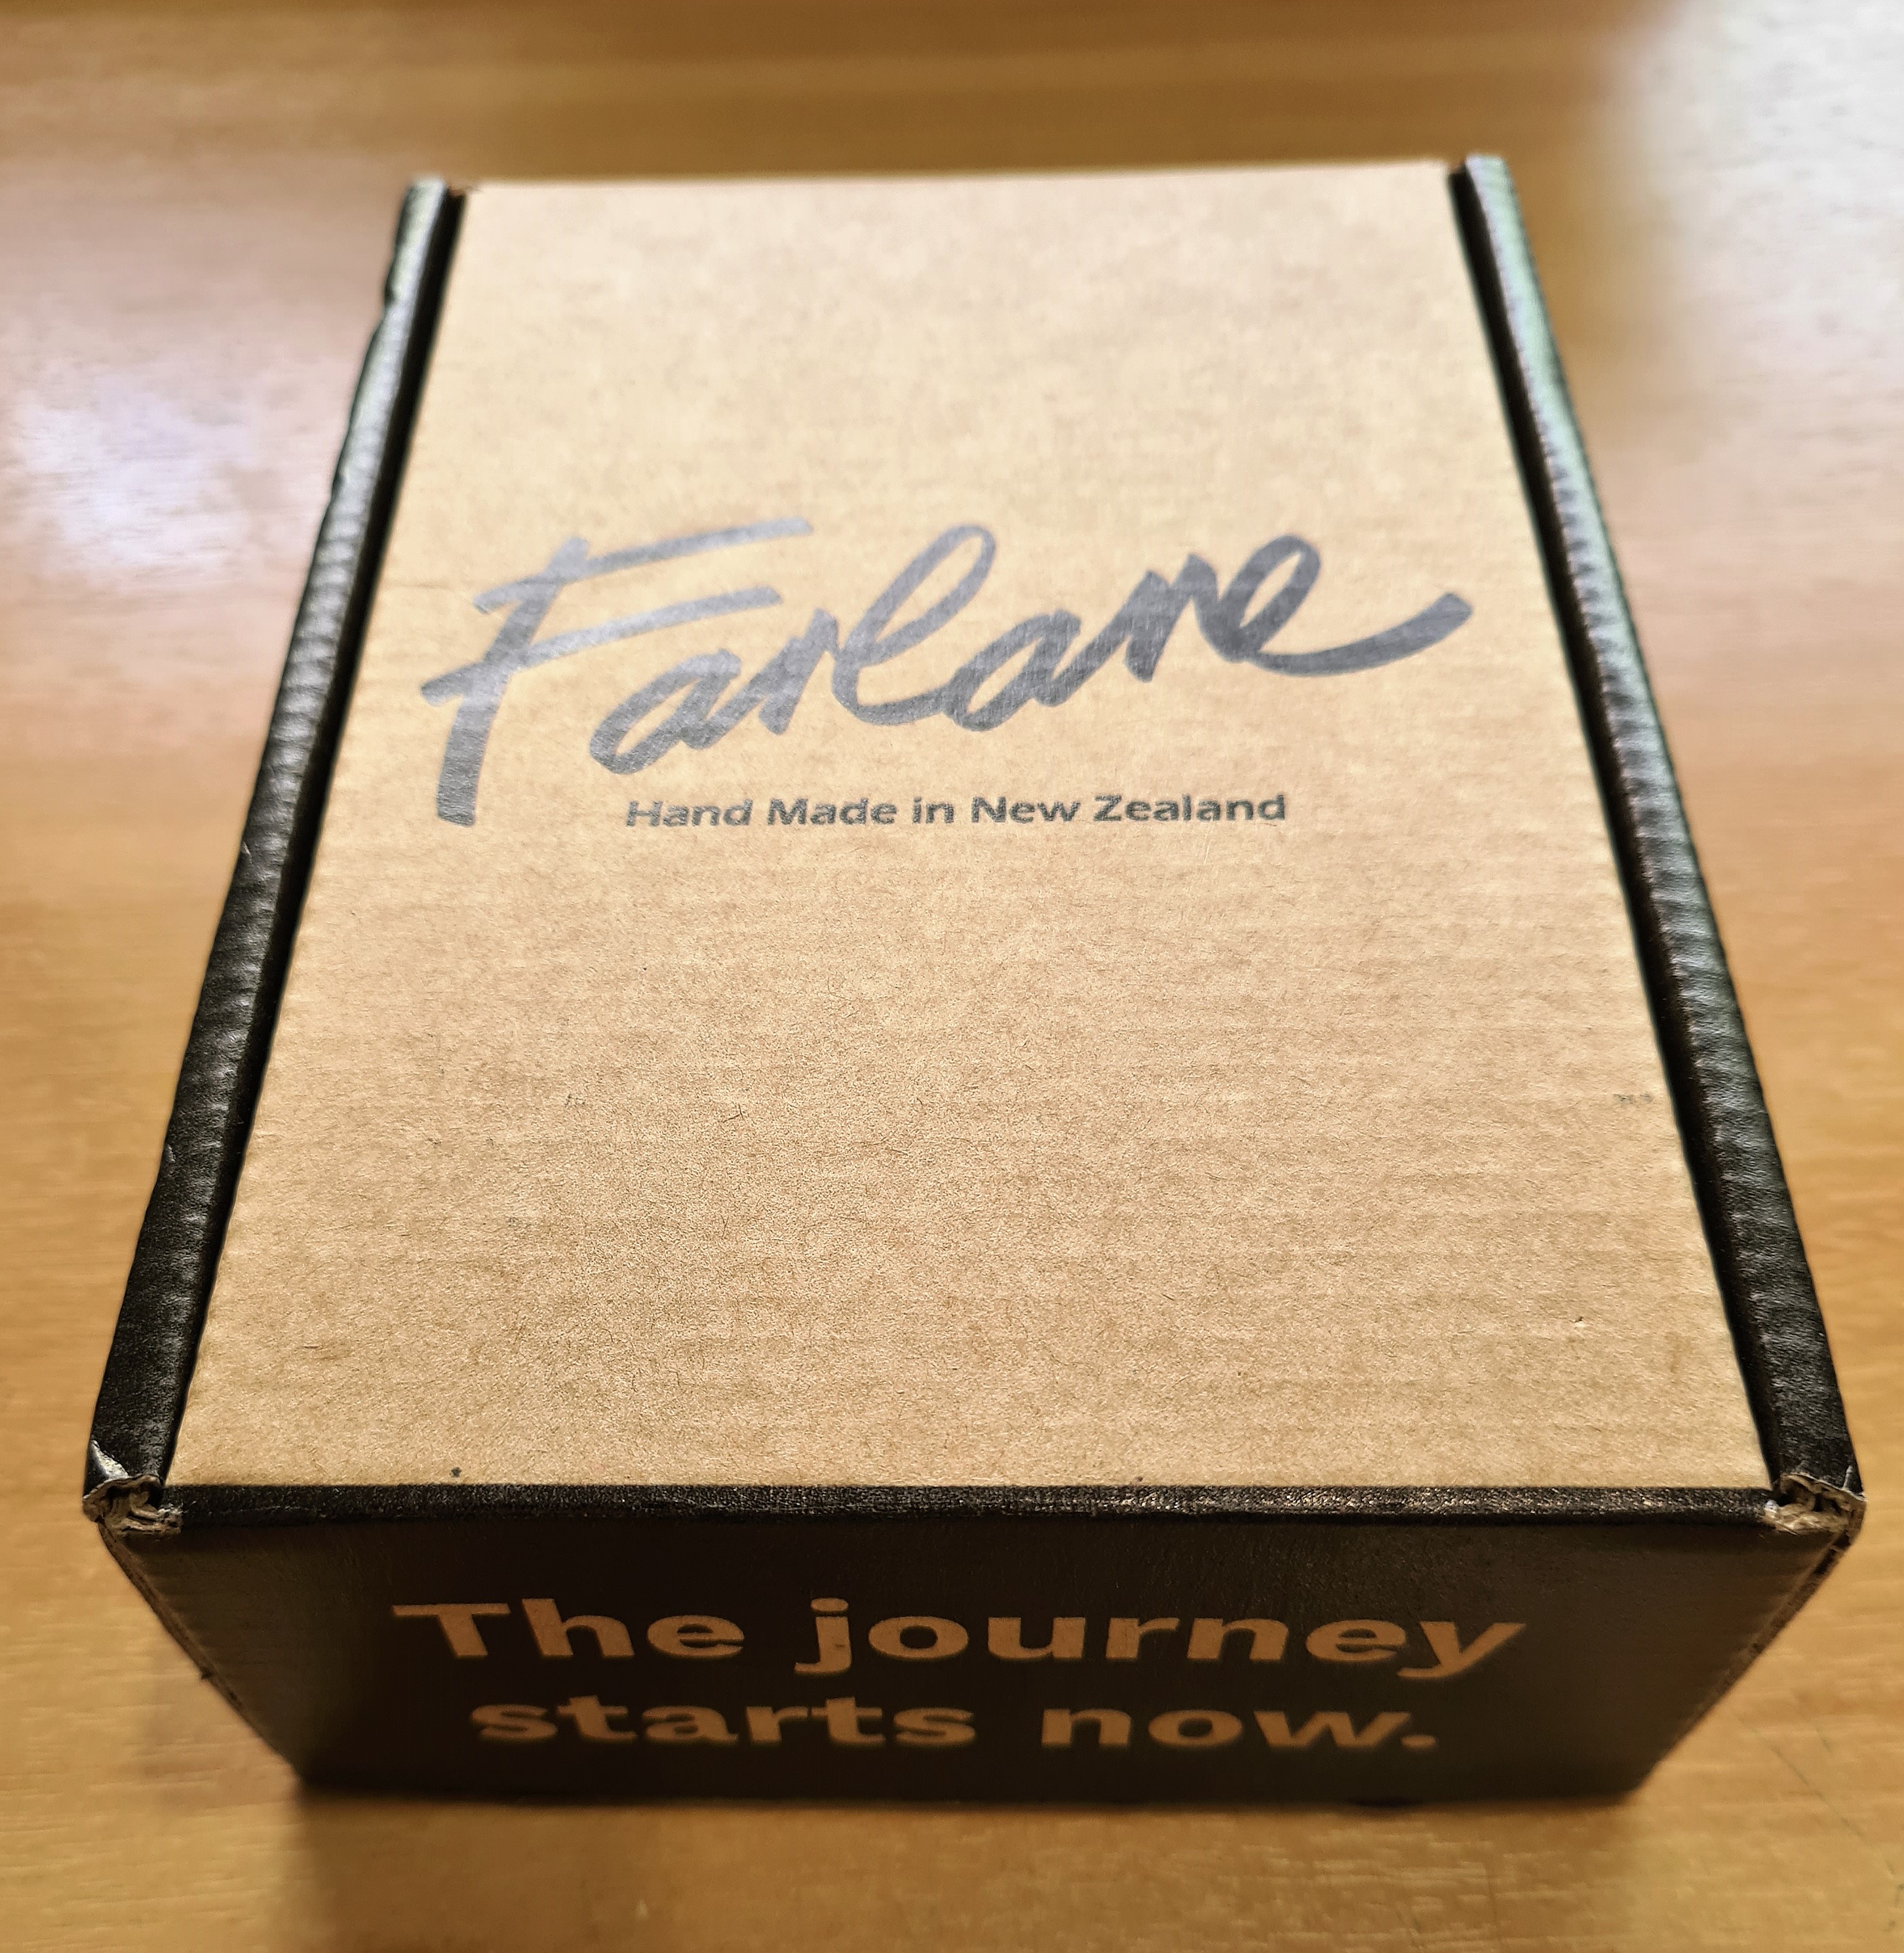 Farlane Pickups Box.jpg